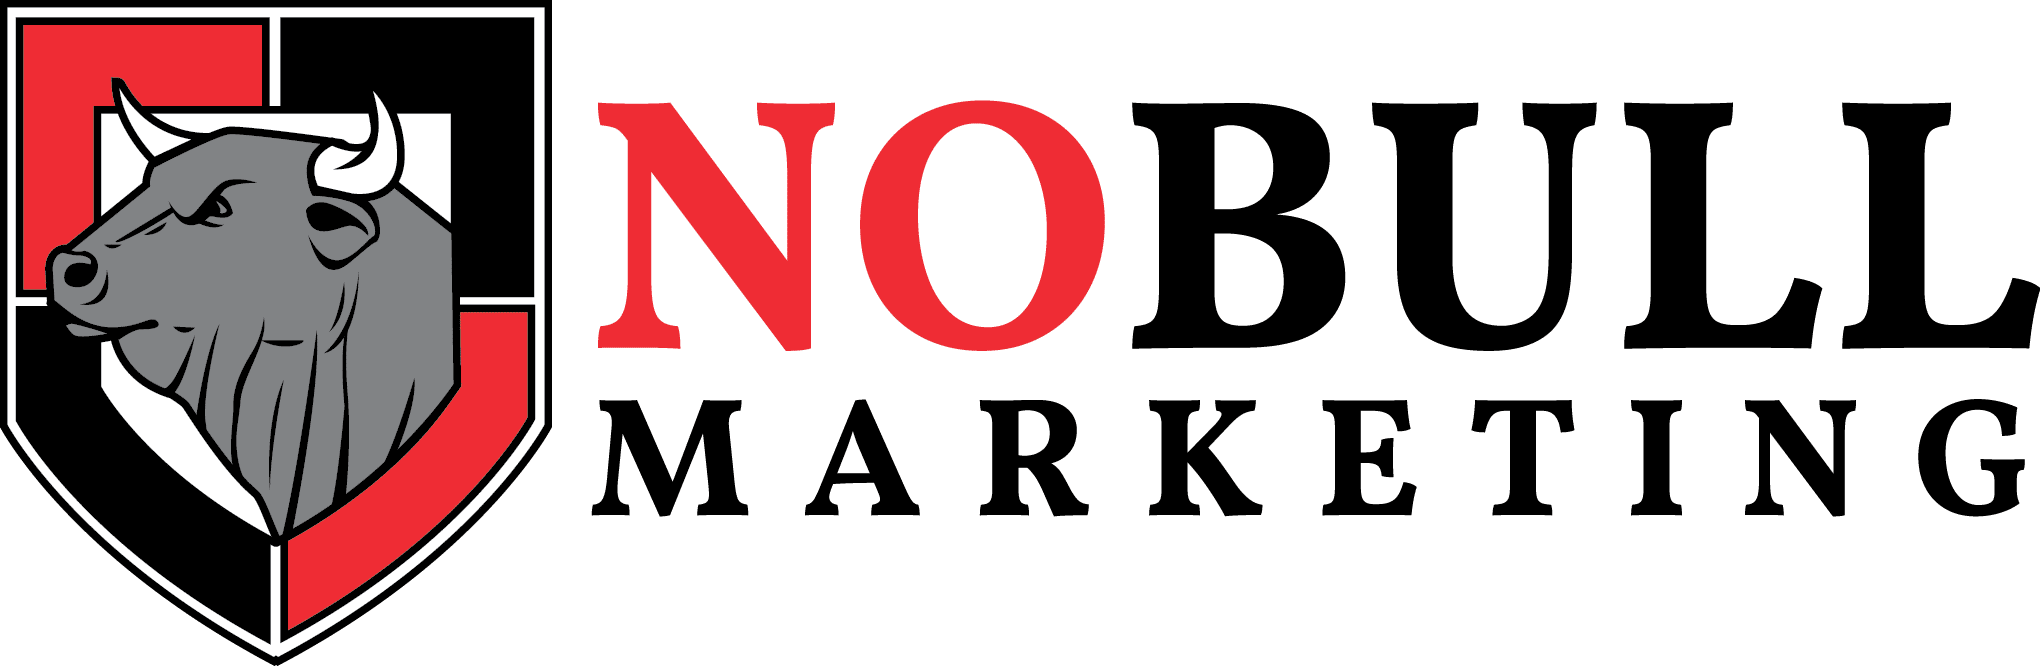 nobull marketing logo